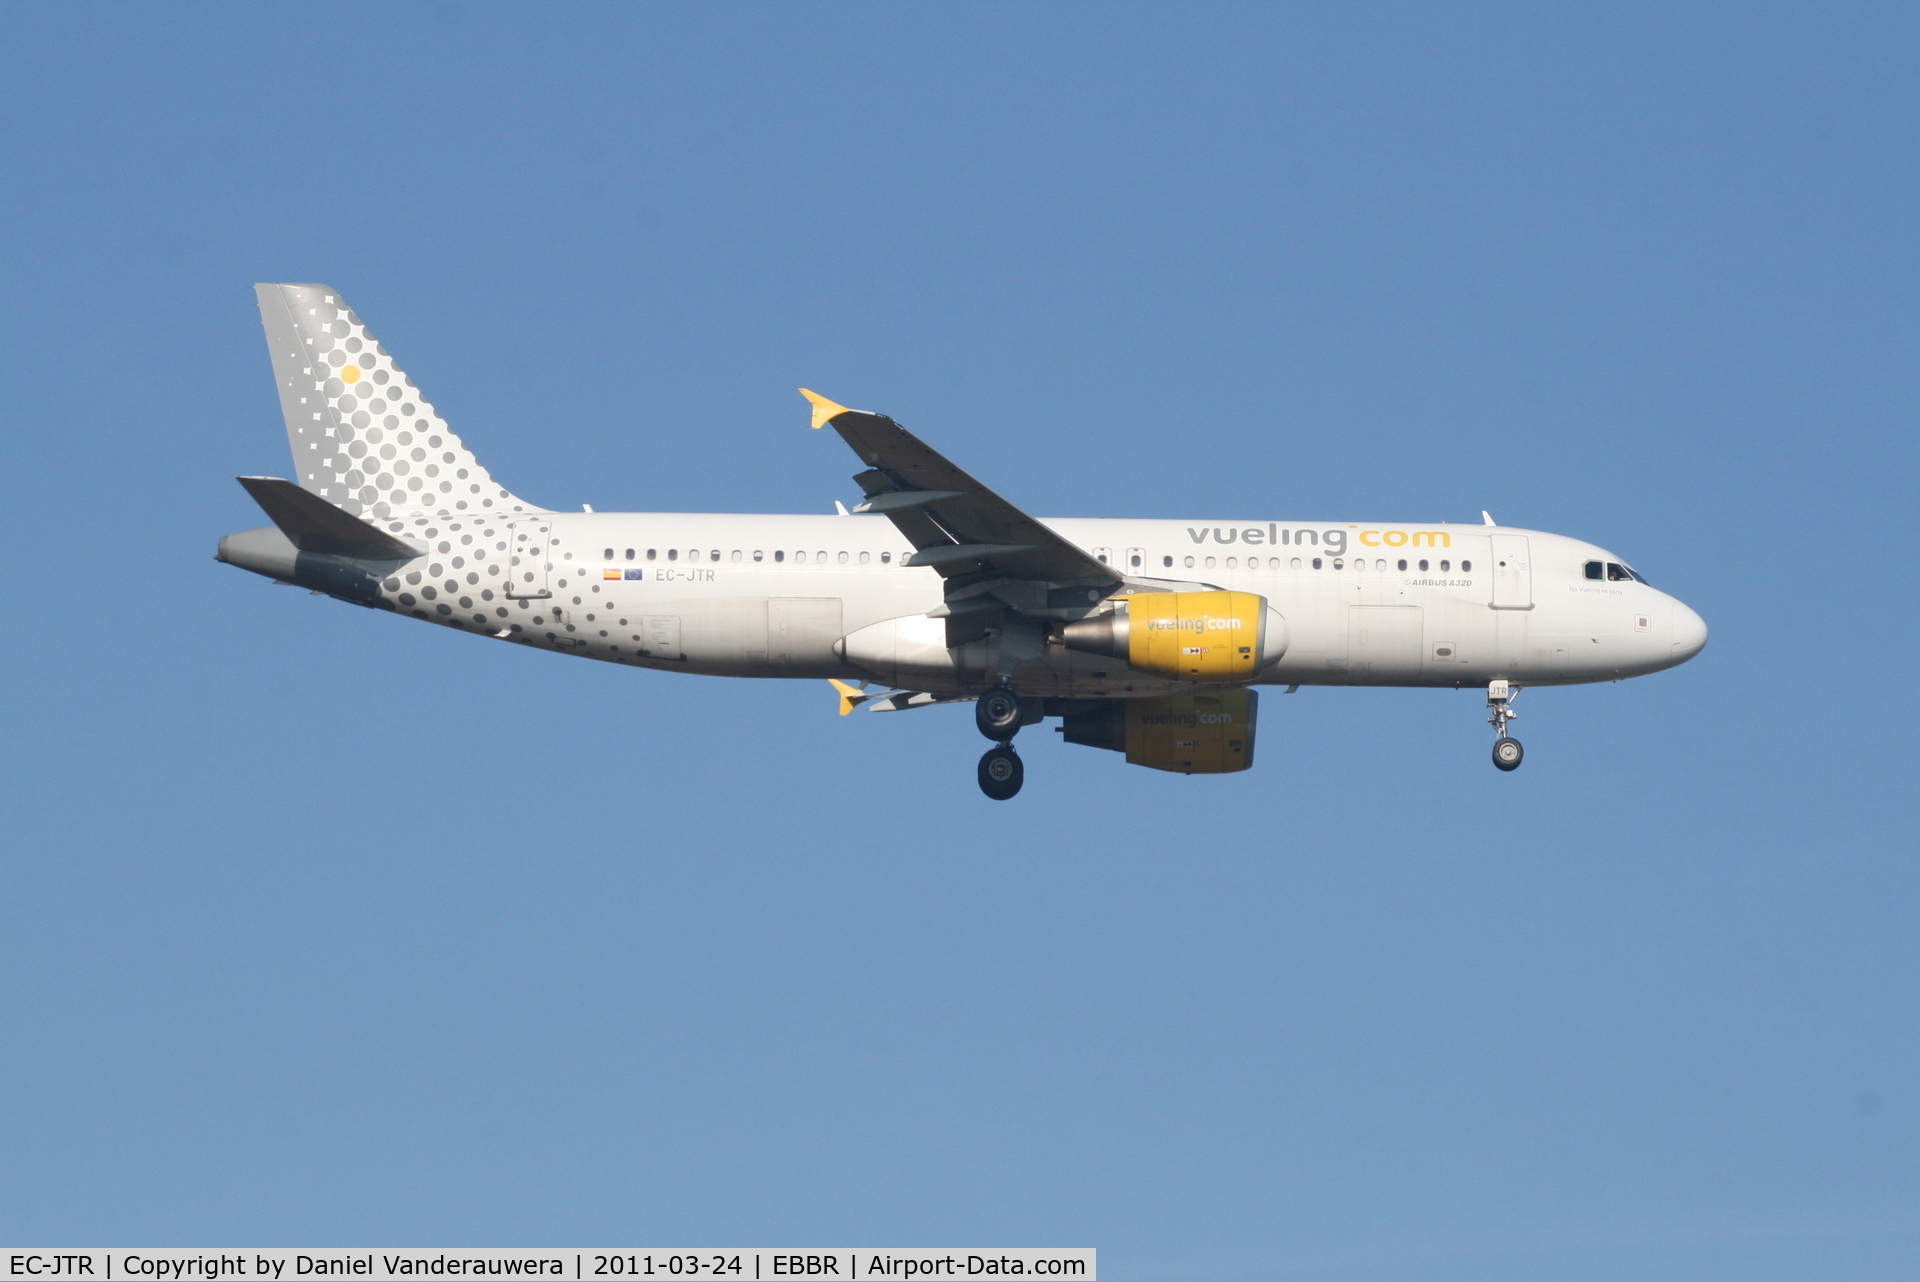 EC-JTR, 2006 Airbus A320-214 C/N 2798, Flight VY8988 is descending to RWY 02